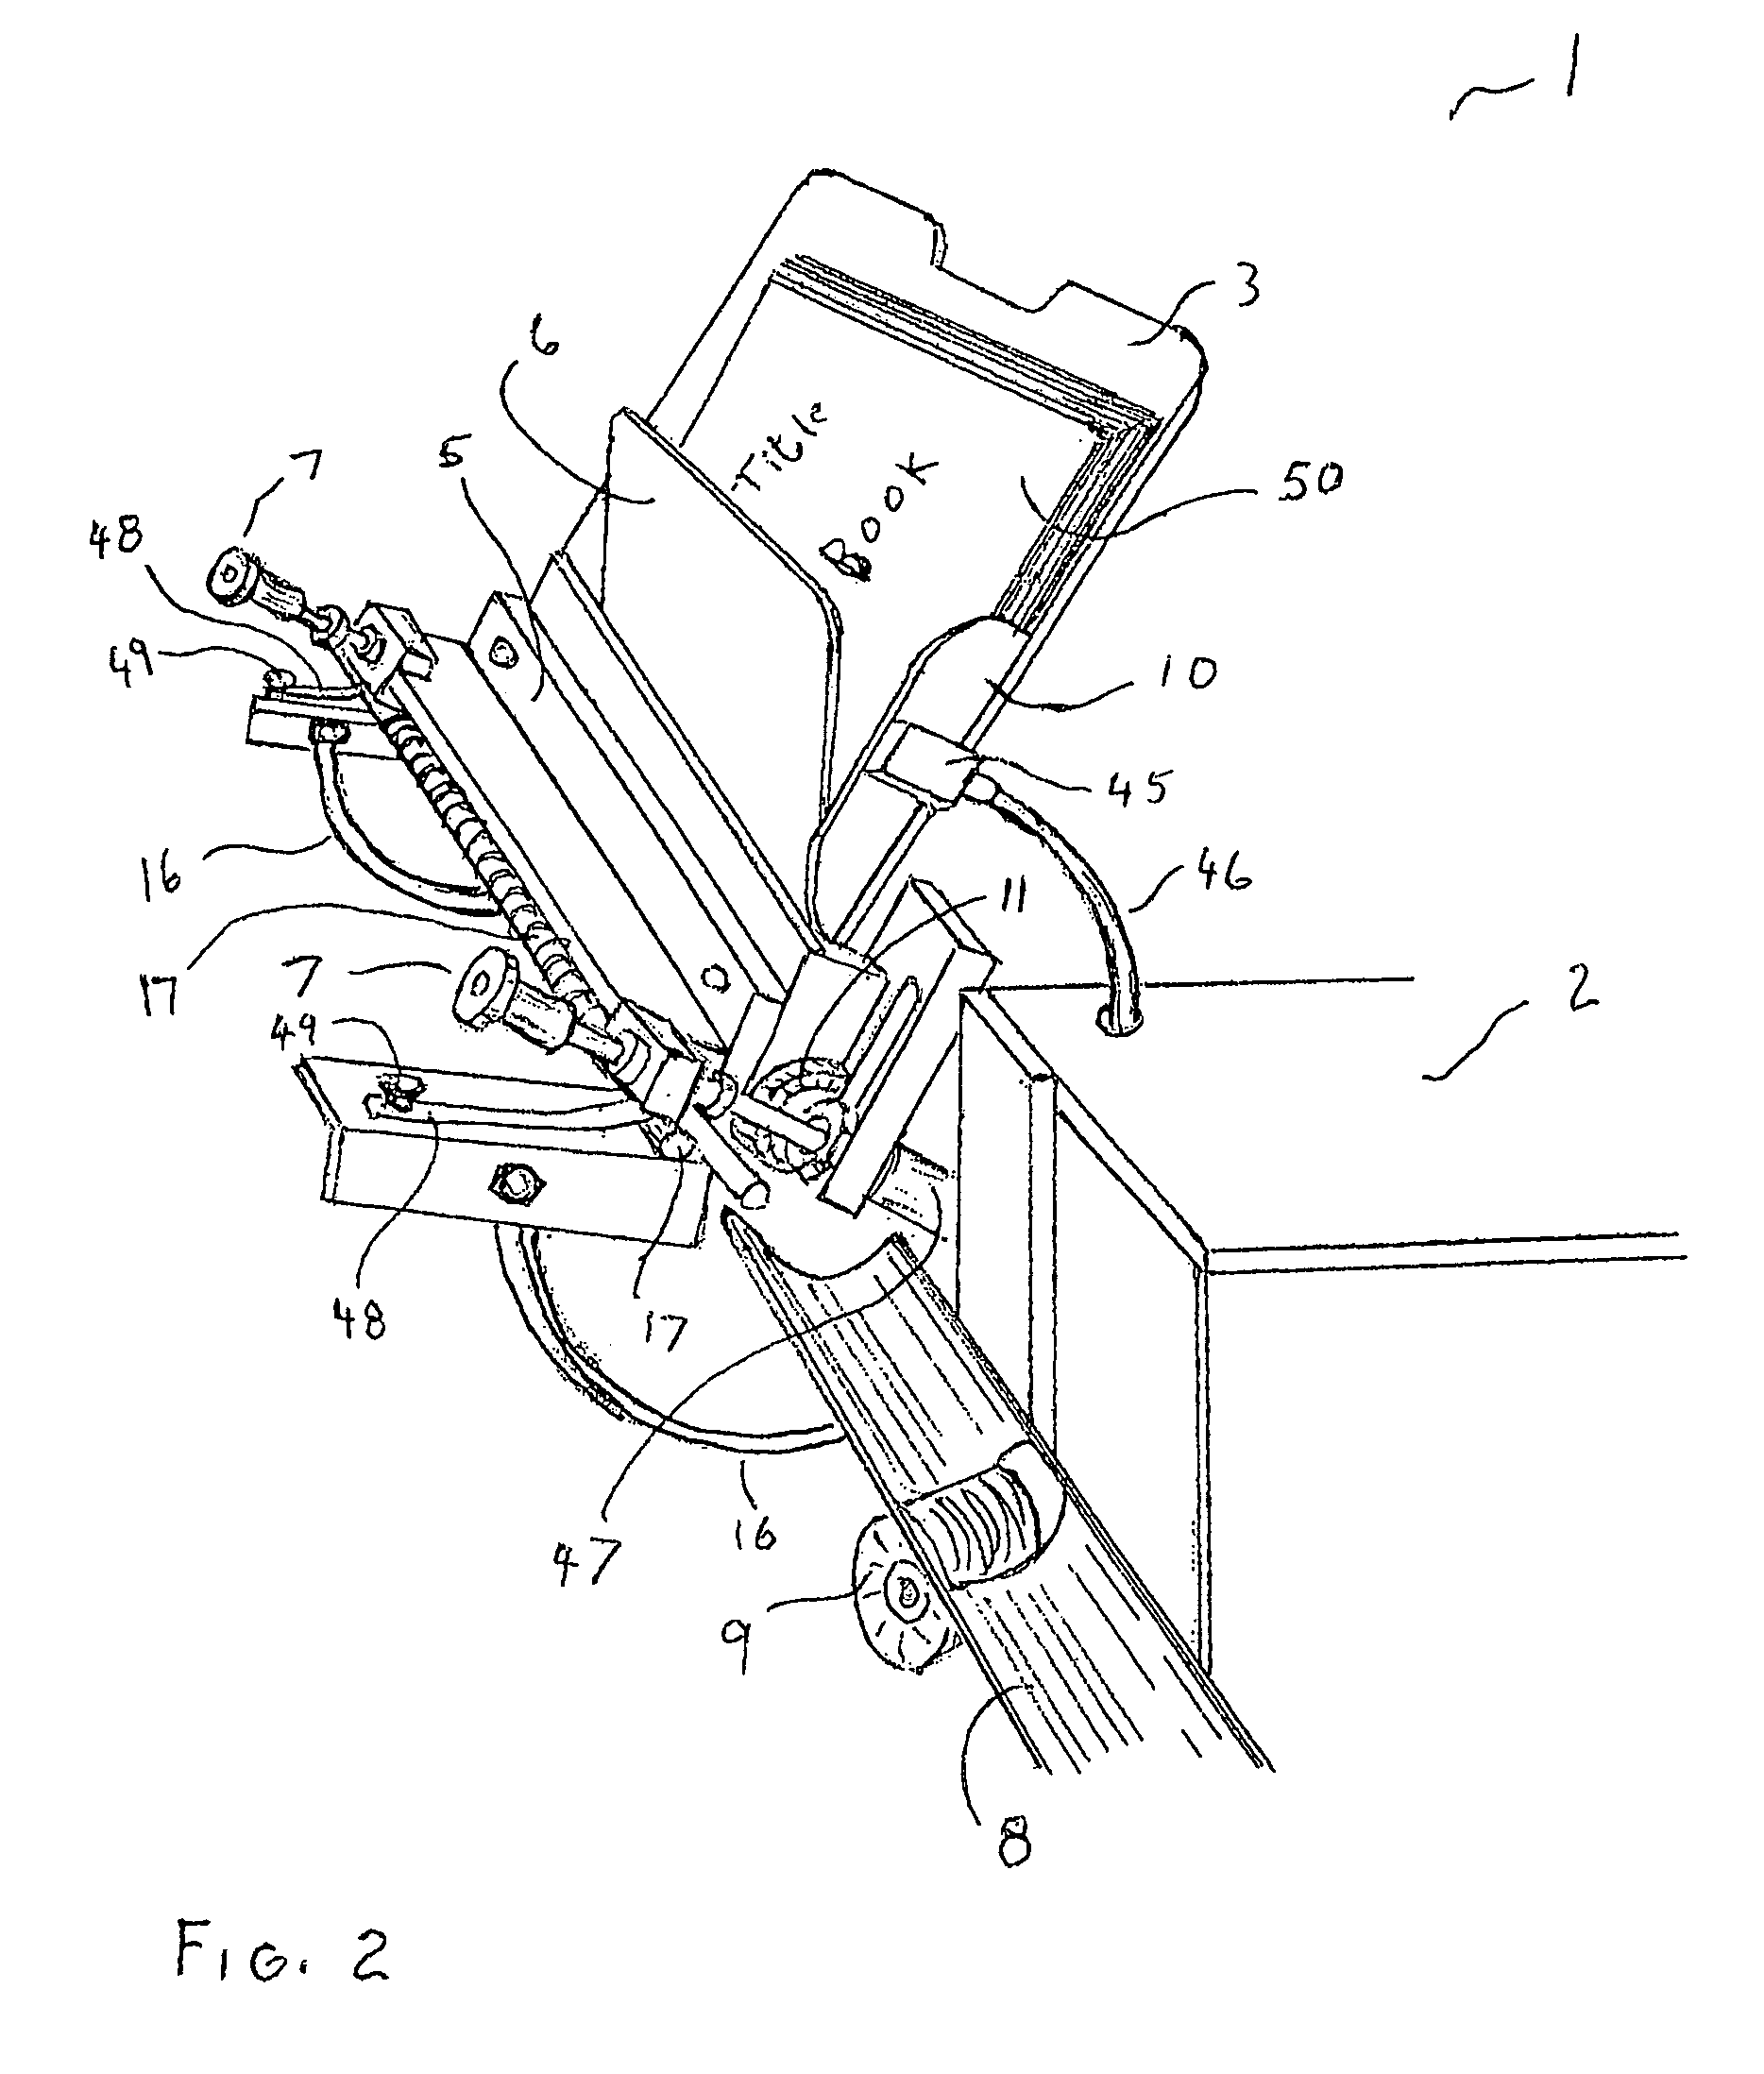 Semi-automatic plastic spiral binding machine